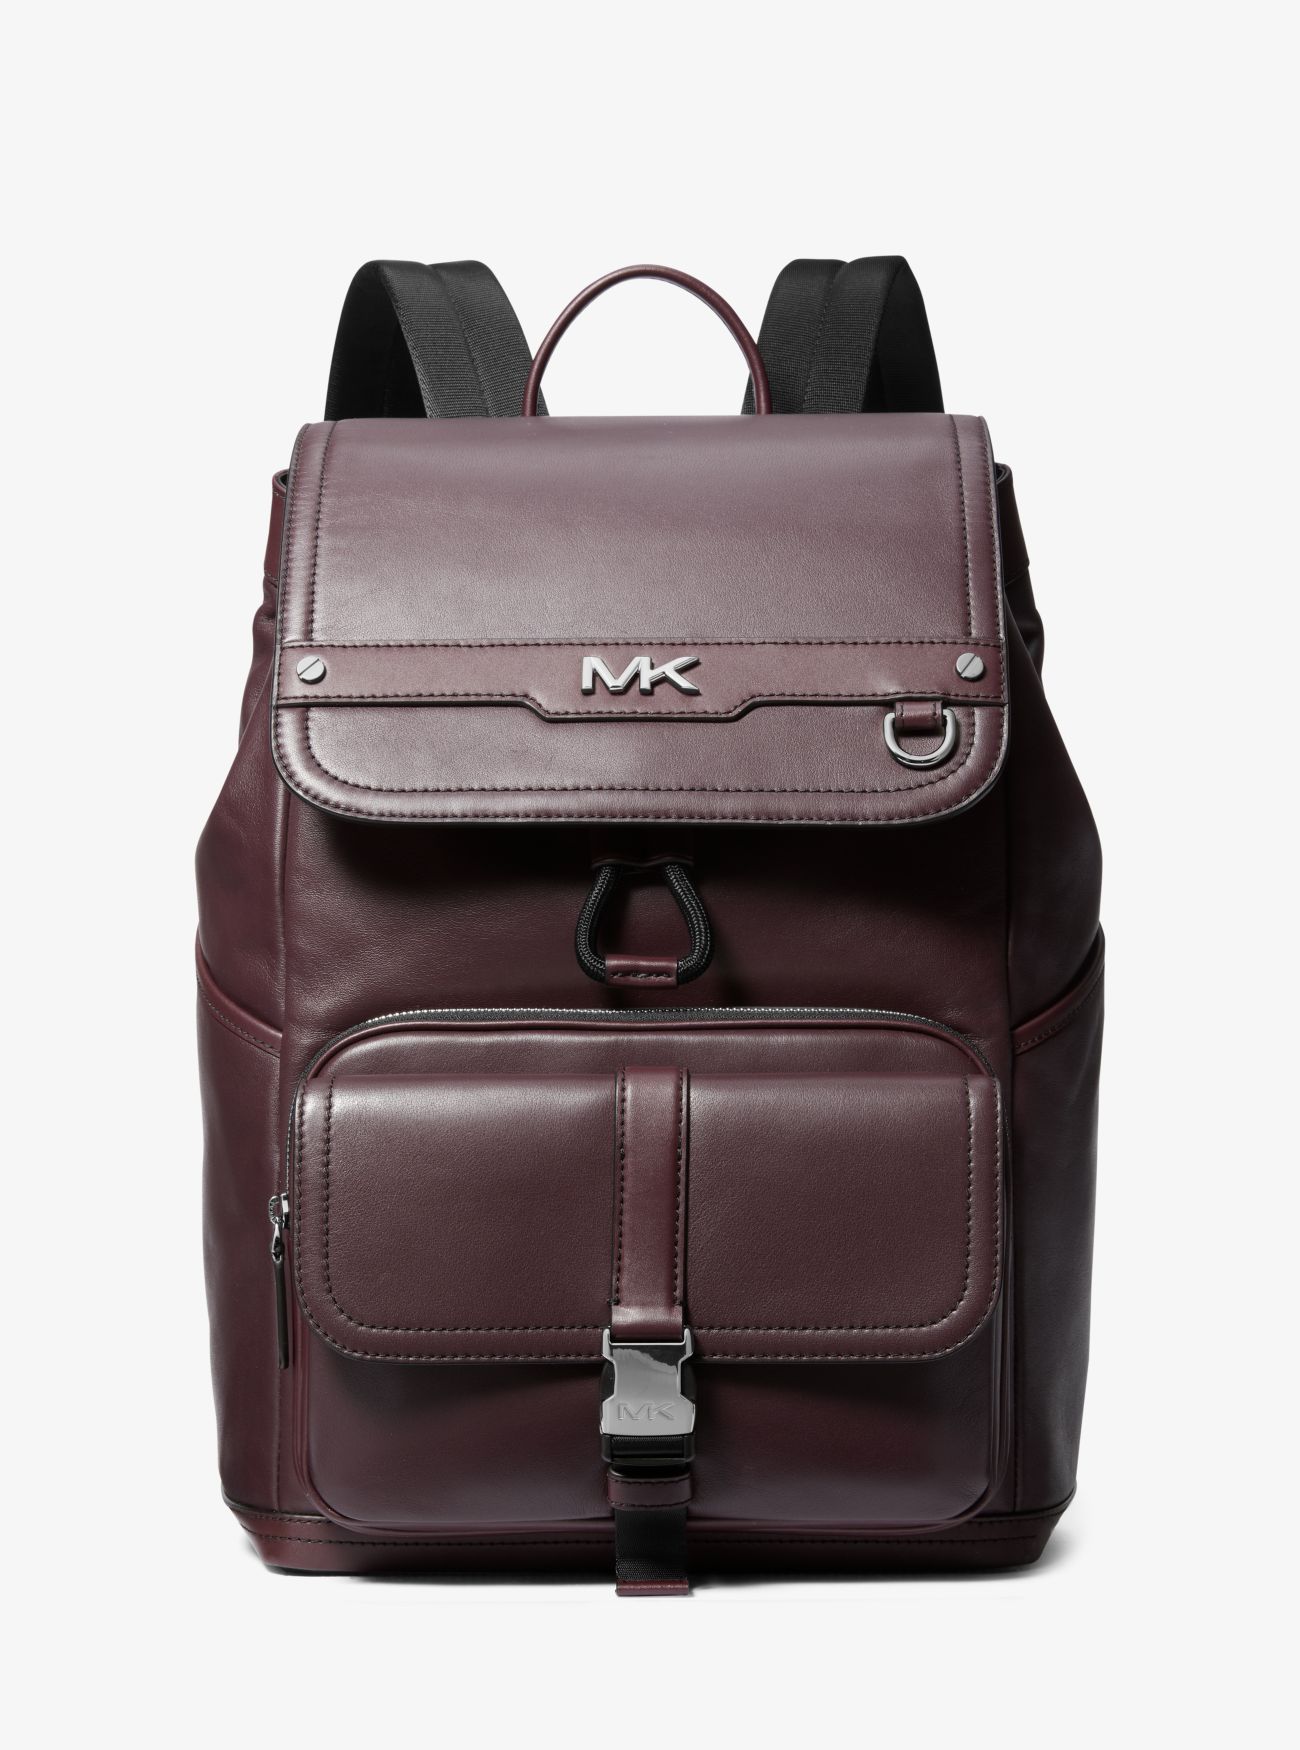 MK Varick Leather Backpack - Shiraz - Michael Kors